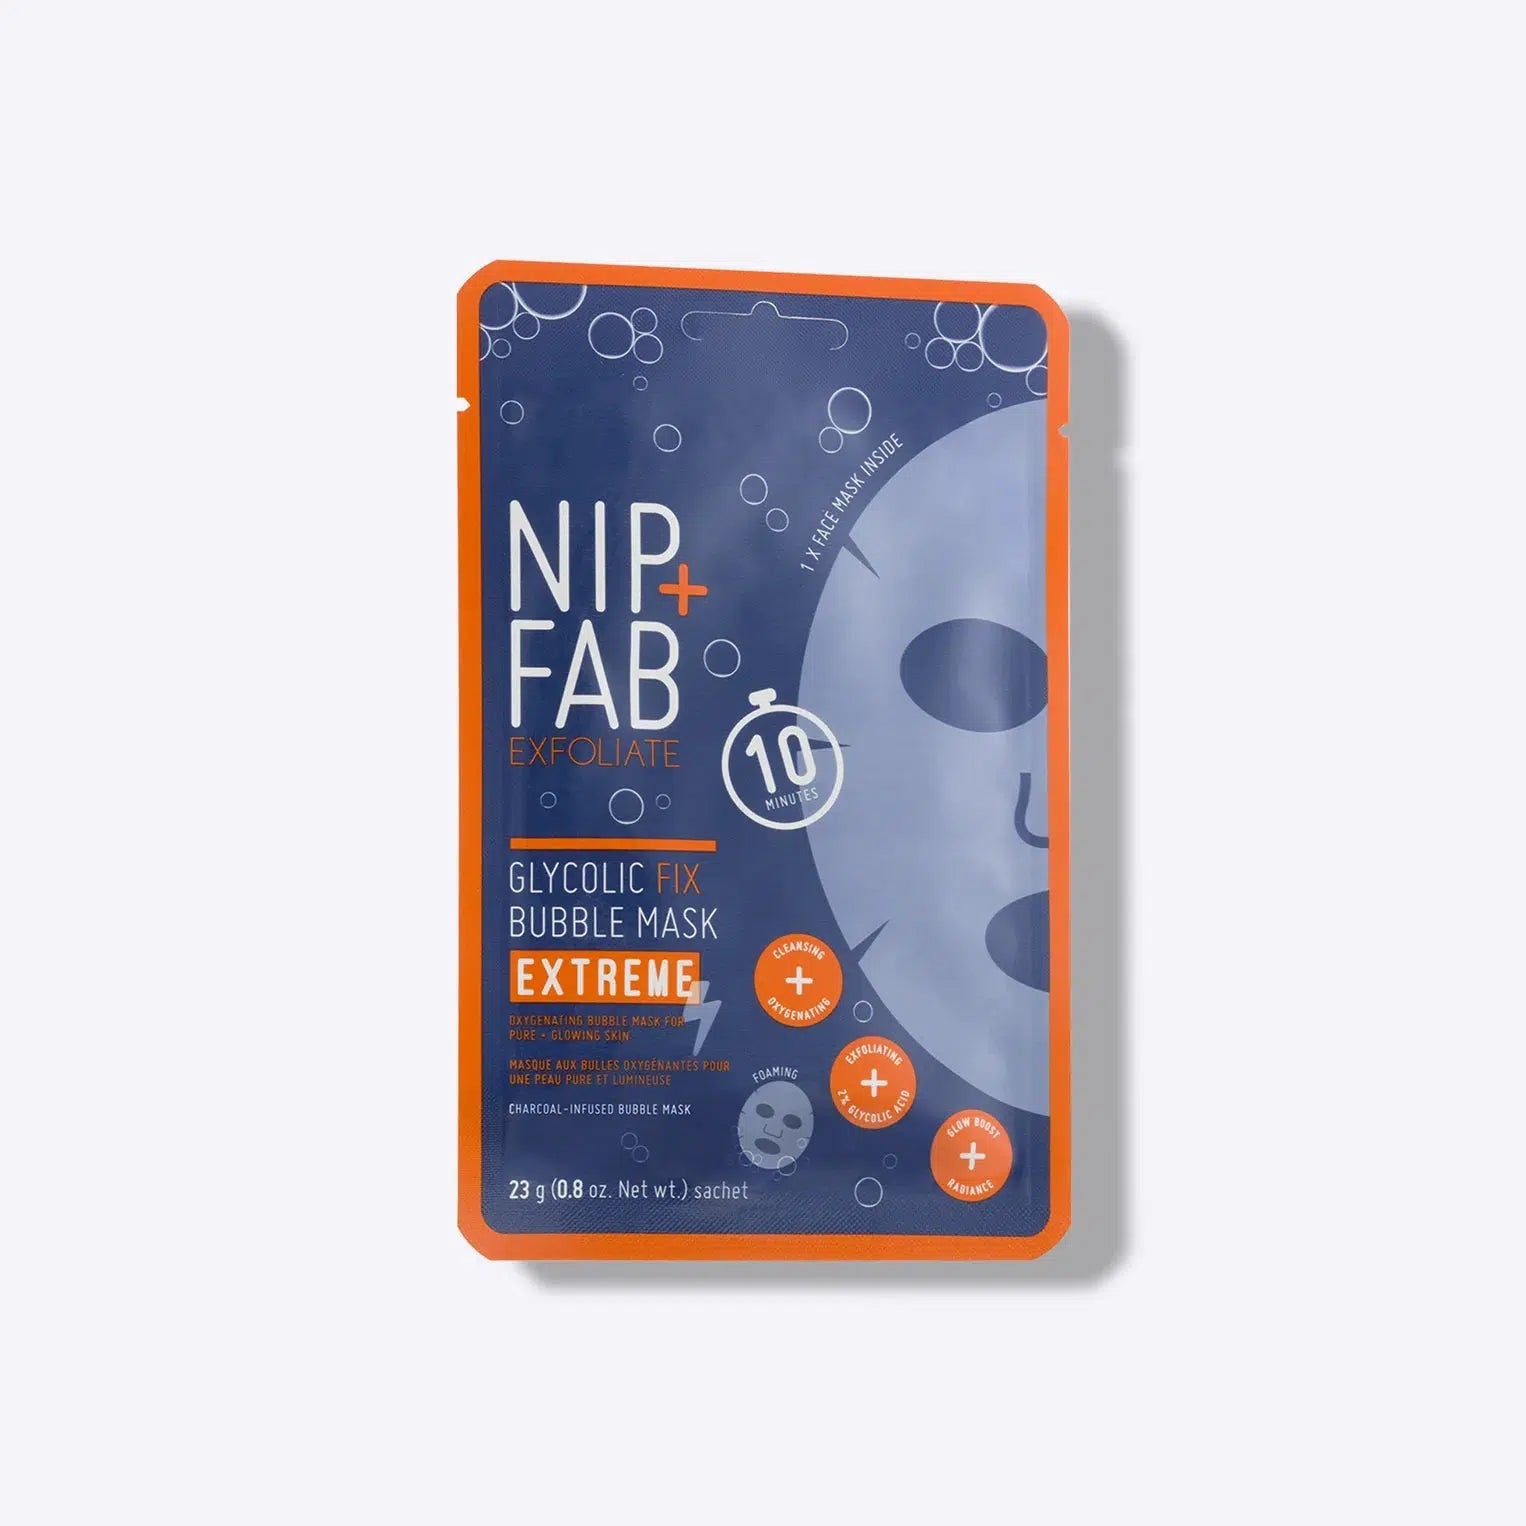 NIP + FAB Glycolic Fix Extr-Bubble Sheet mask 25ml